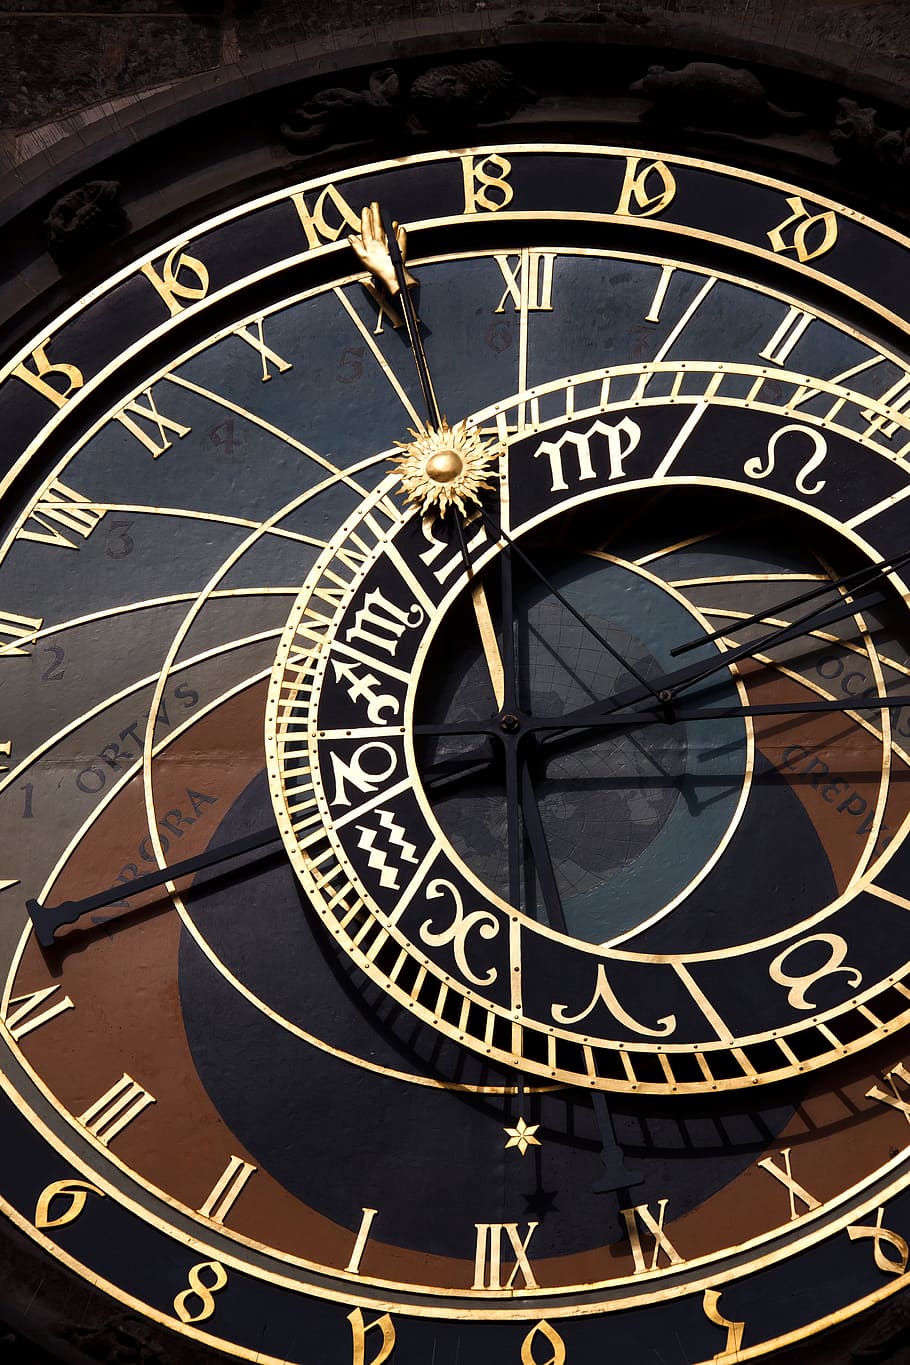 round, black, analog clock, ancient, antique, architecture, astronomical, astronomy, city, clock